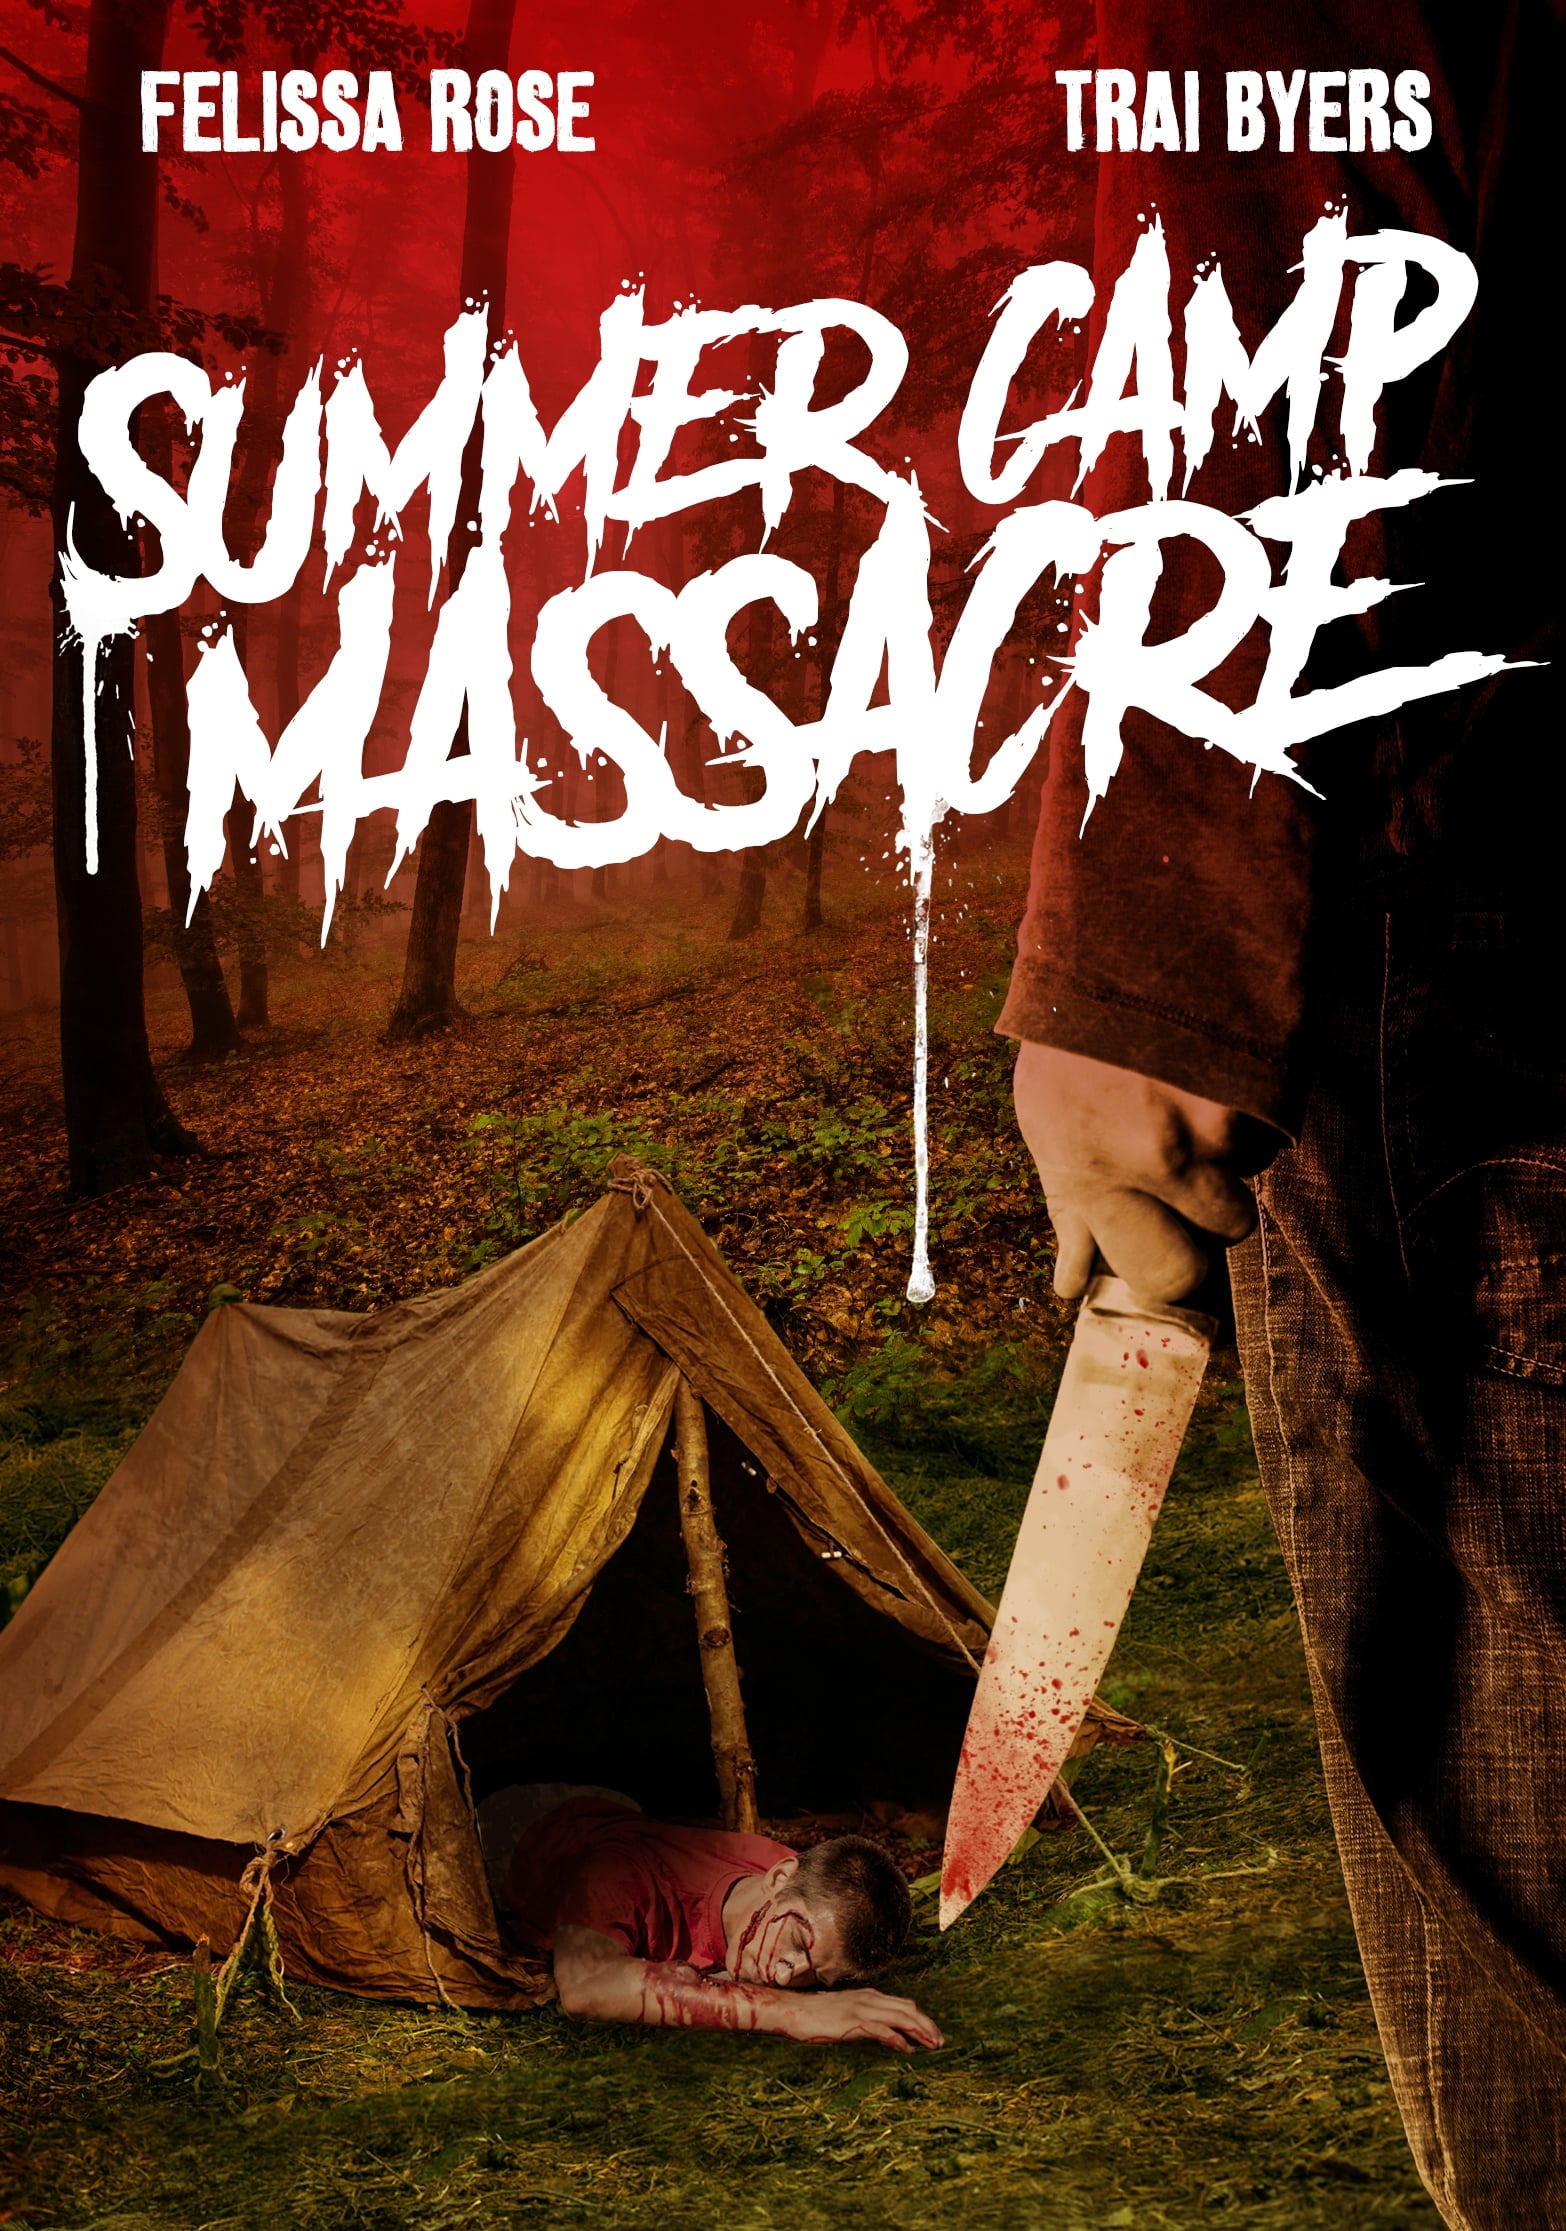 Caesar and Otto's Summer Camp Massacre (2009)